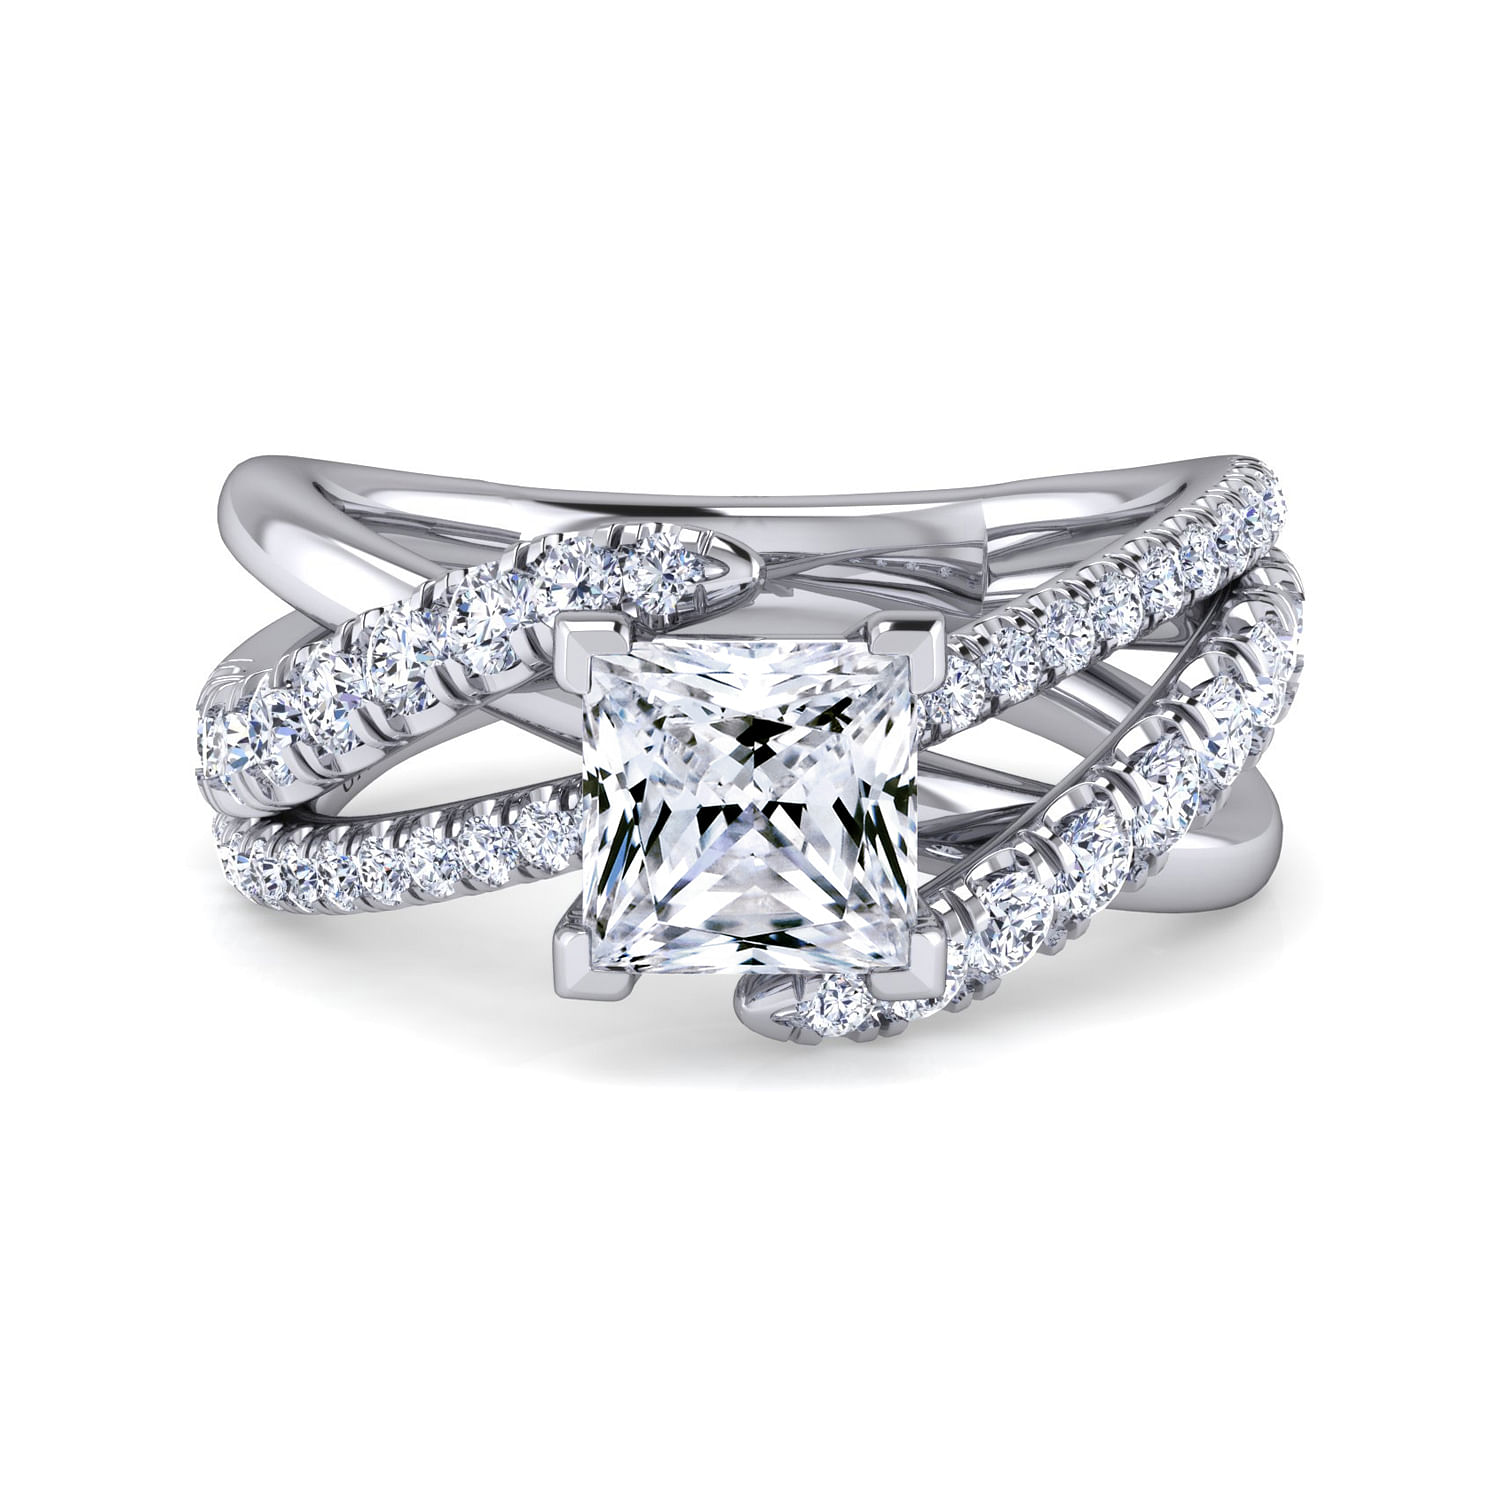 Zaira - 14K White Gold Princess Cut Diamond Engagement Ring